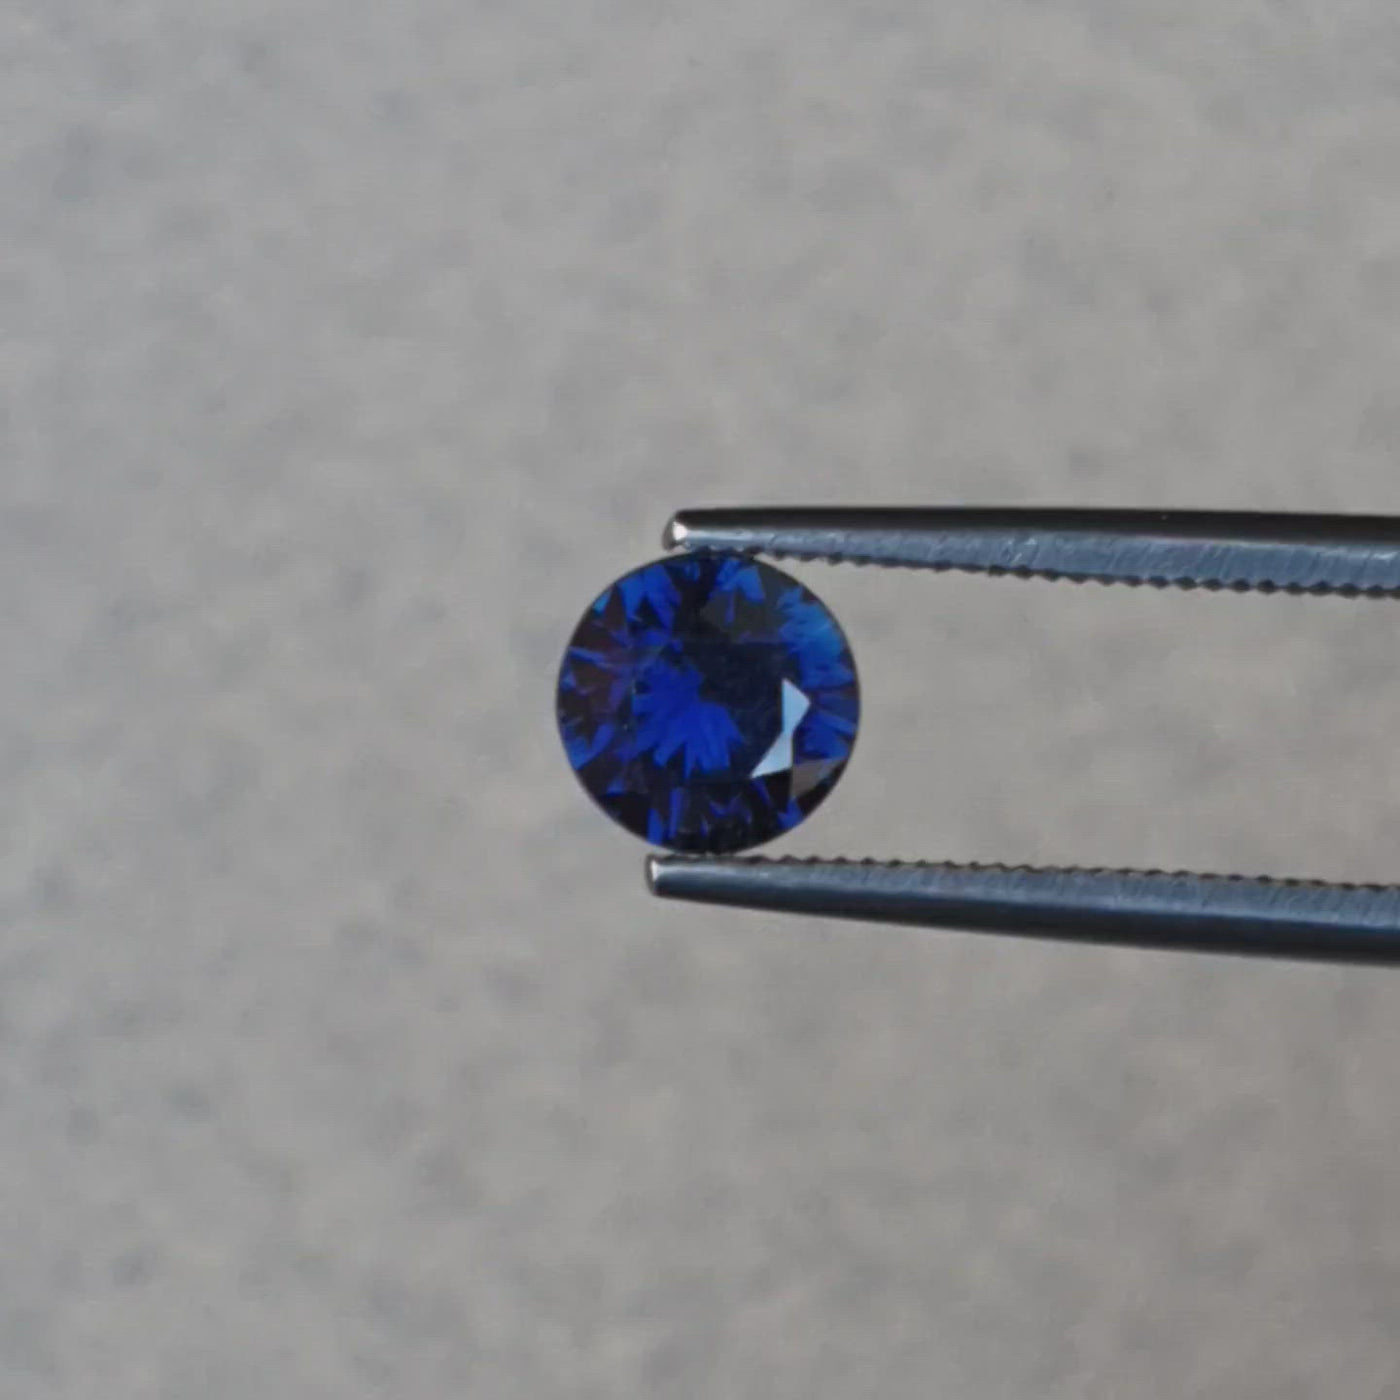 1.05ct Australian Sapphire, Royal Blue - Round